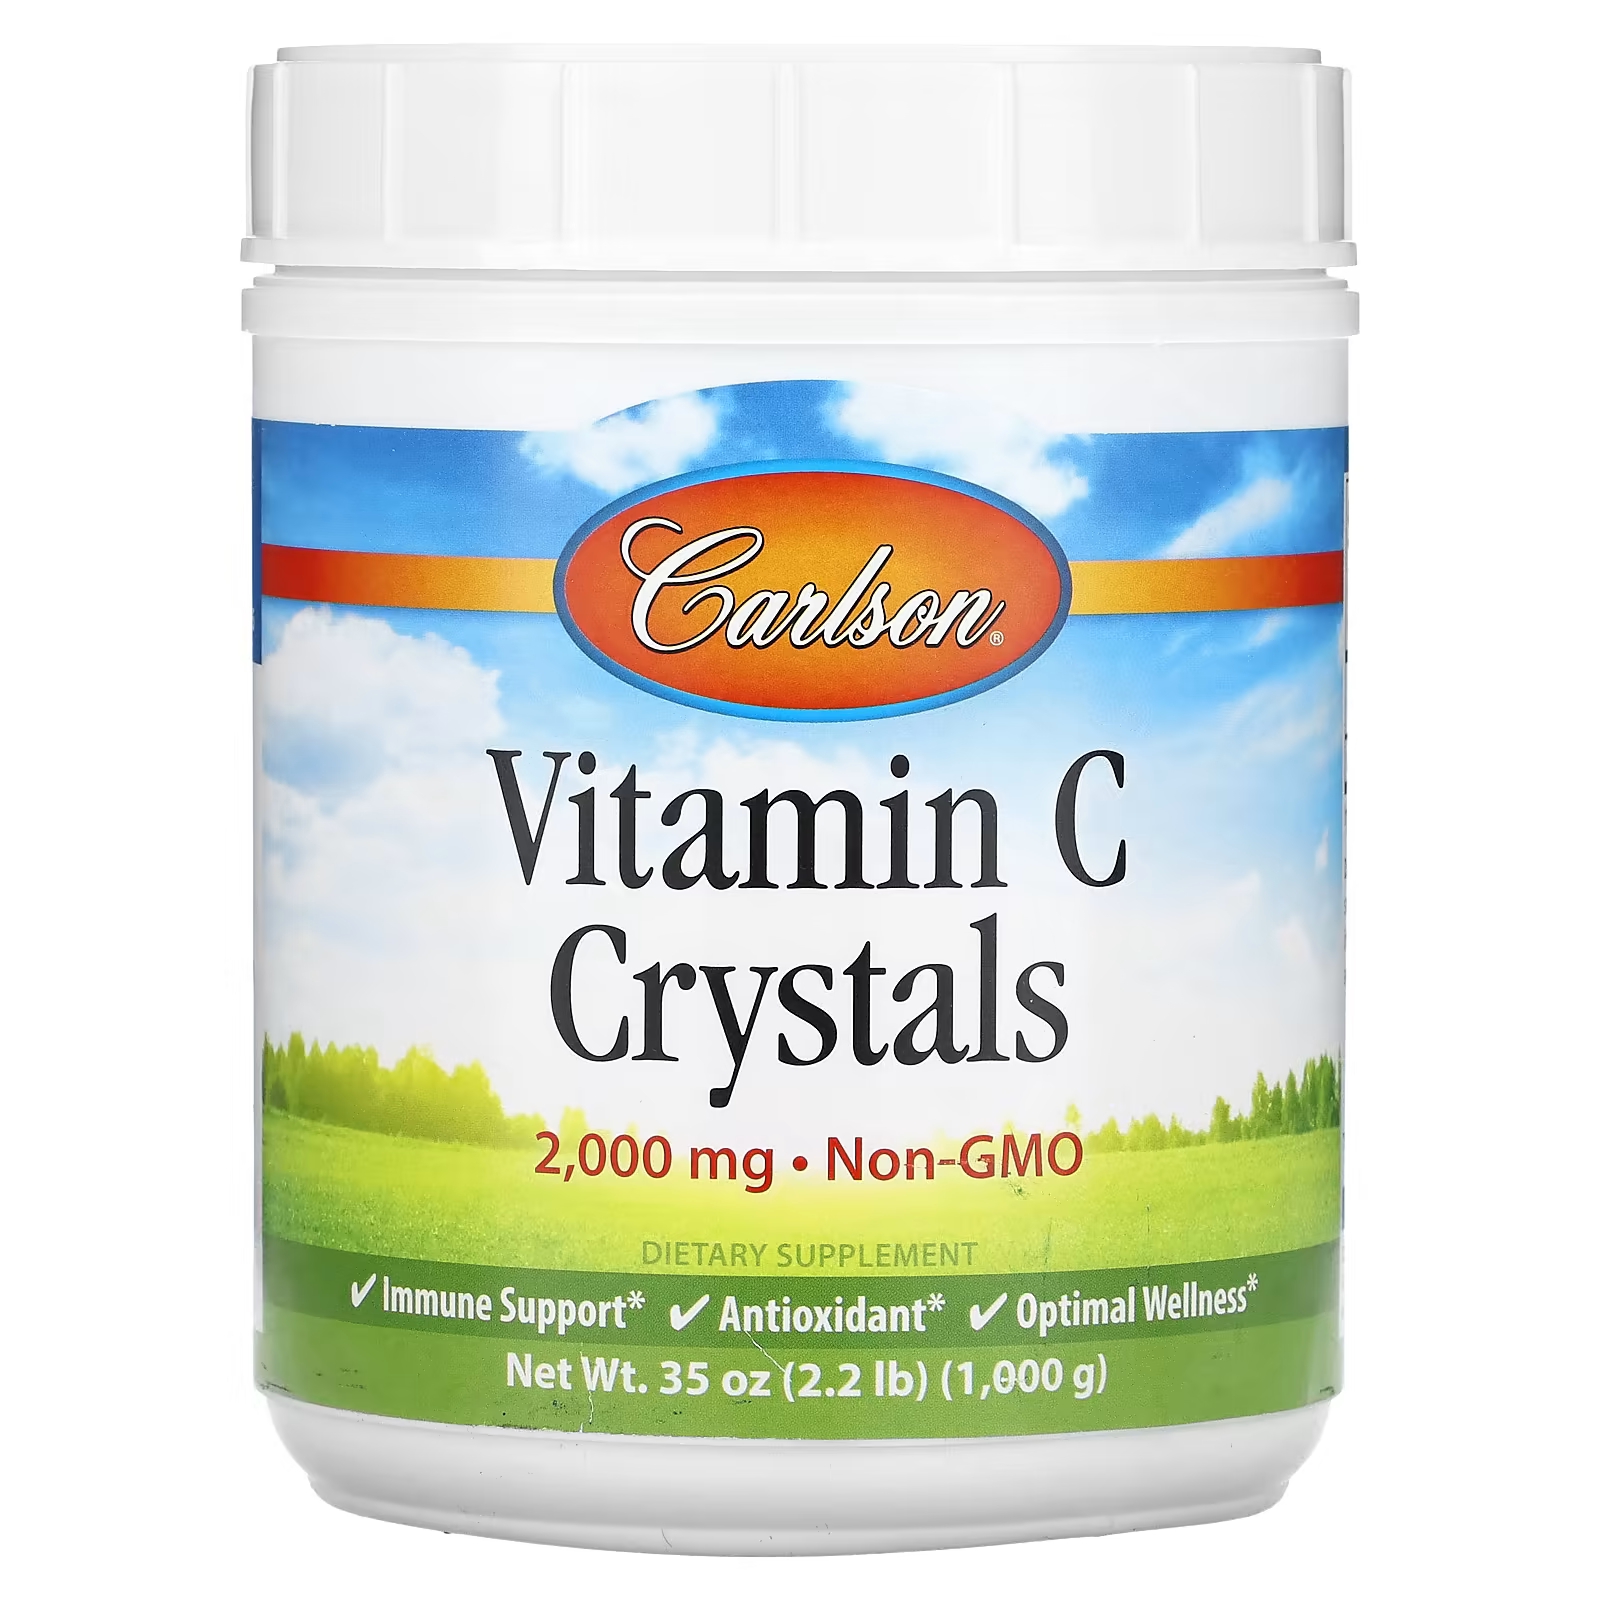 Кристаллы витамина С Carlson 2000 мг, 1000 г carlson кристаллы витамина c 2000 мг 170 г 6 унций